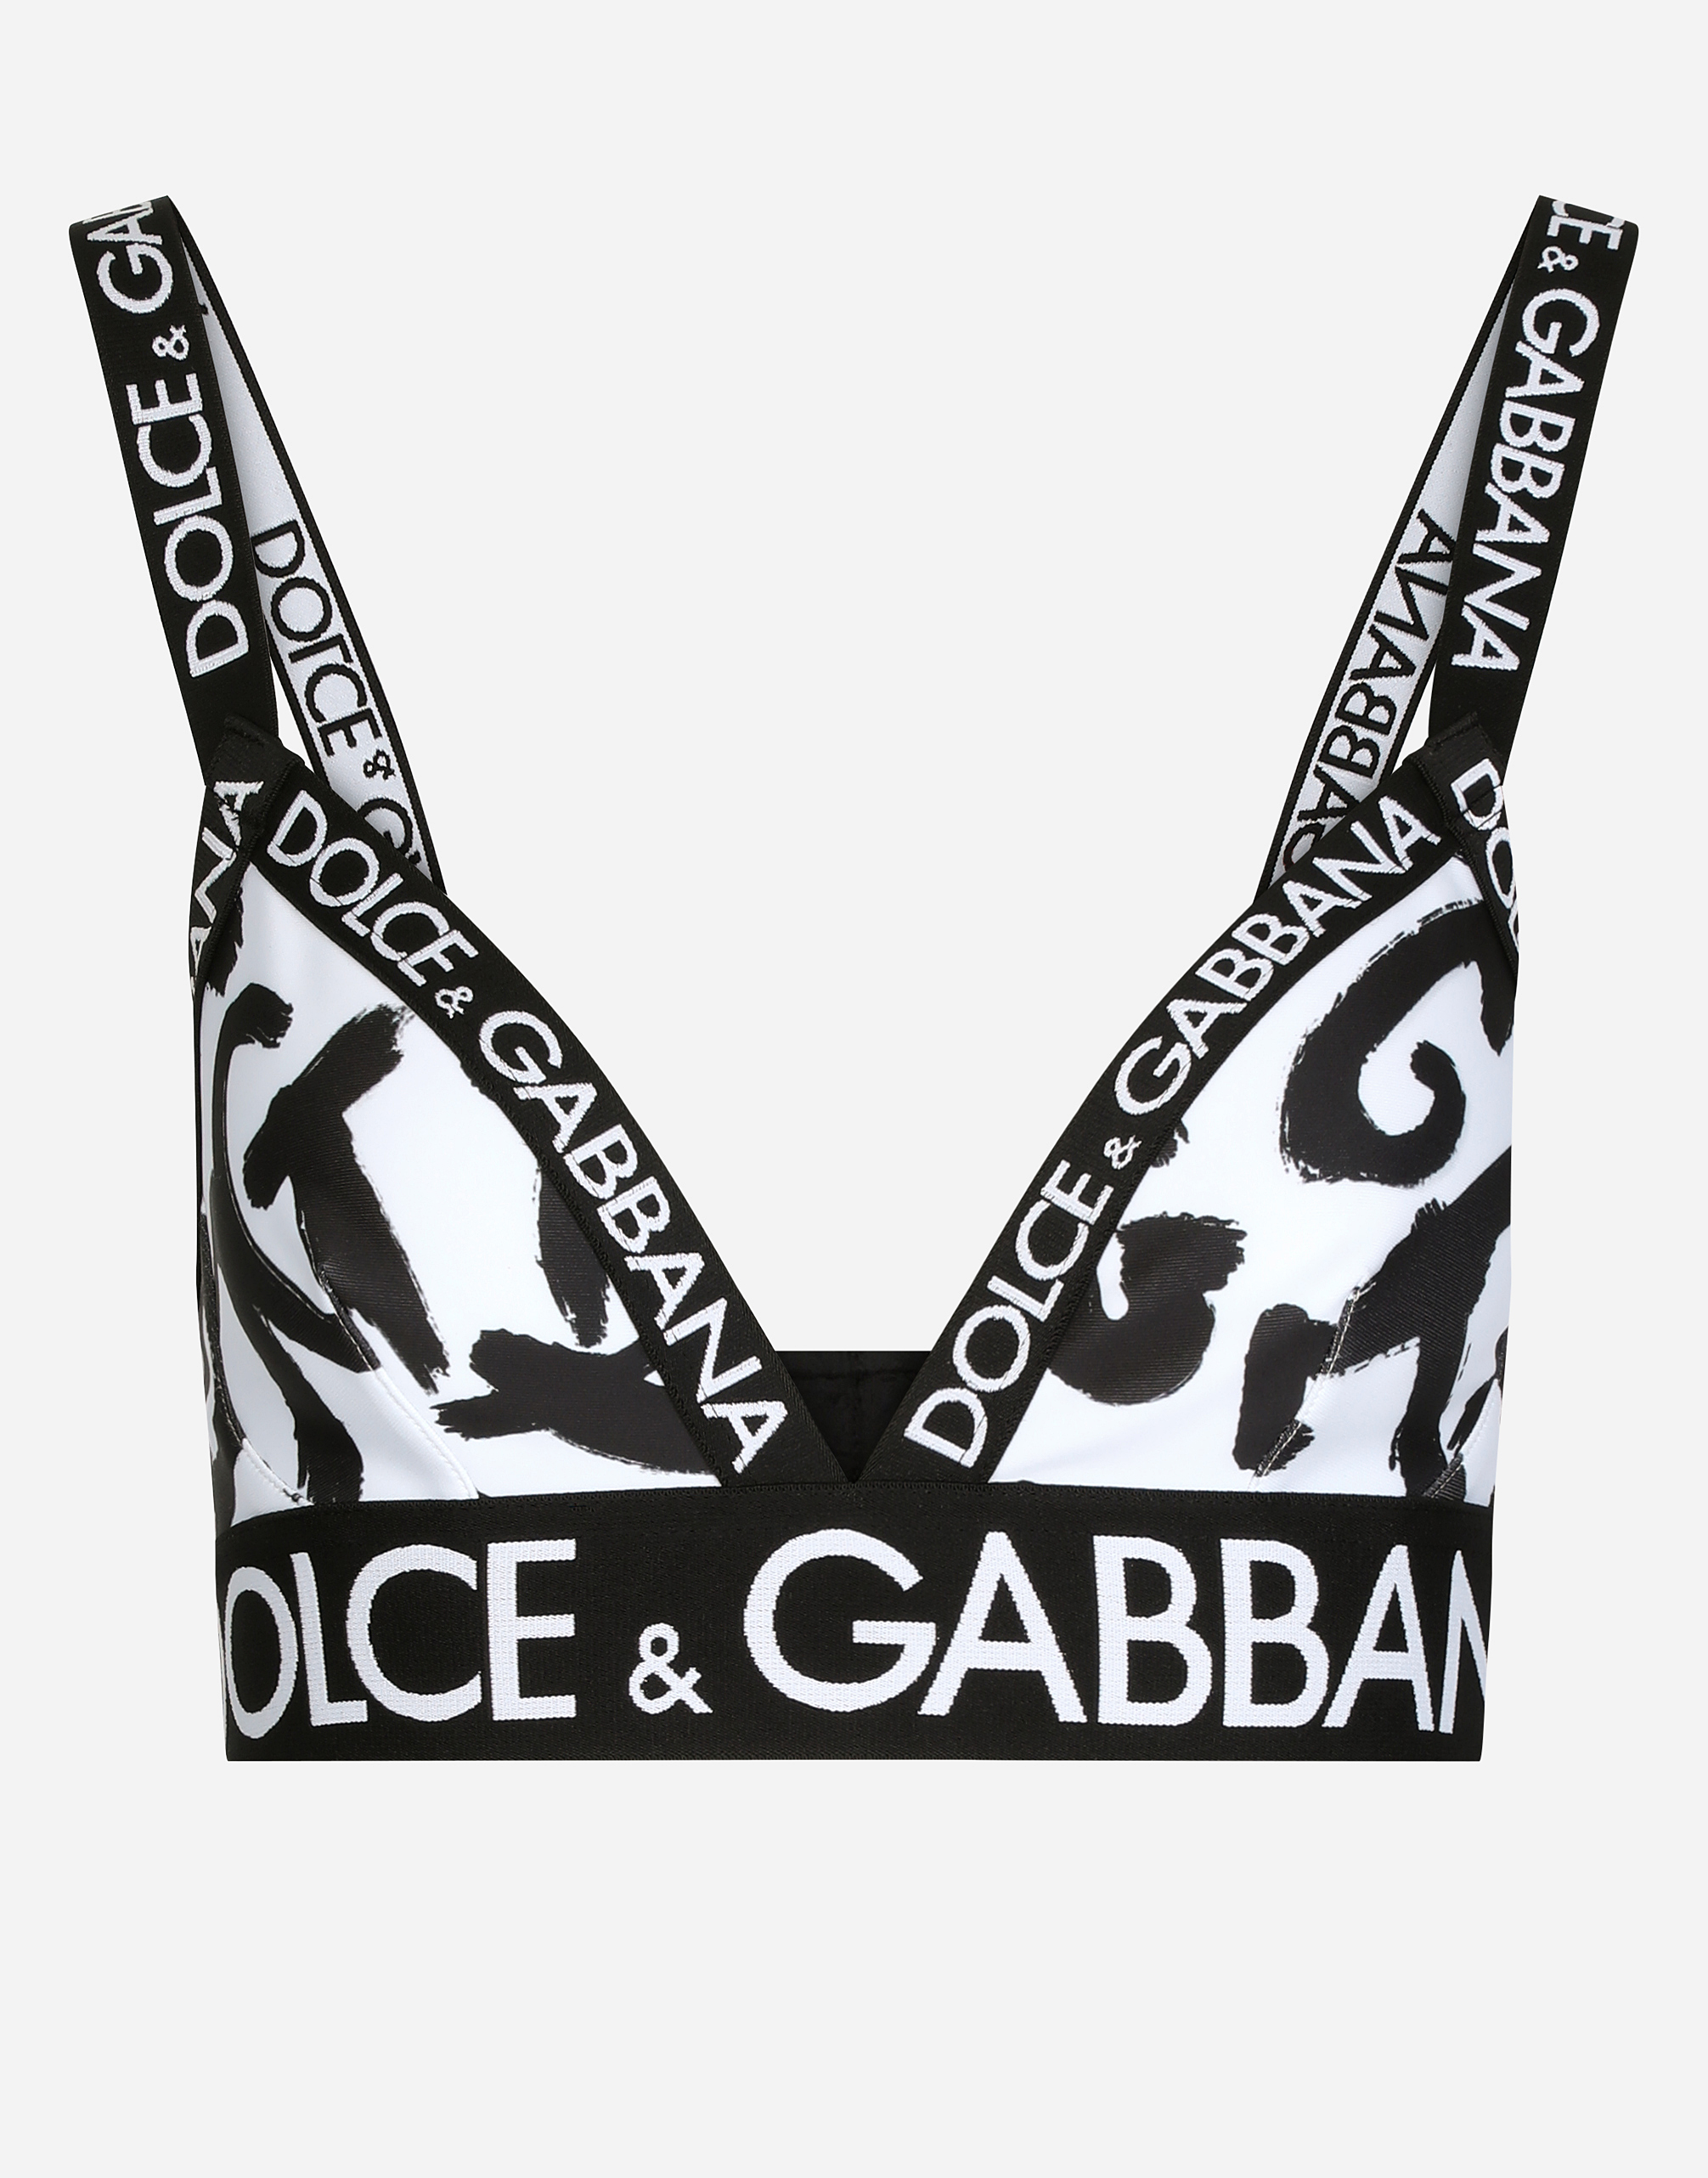 Dolce & Gabbana Triangle bra with graffiti logo print